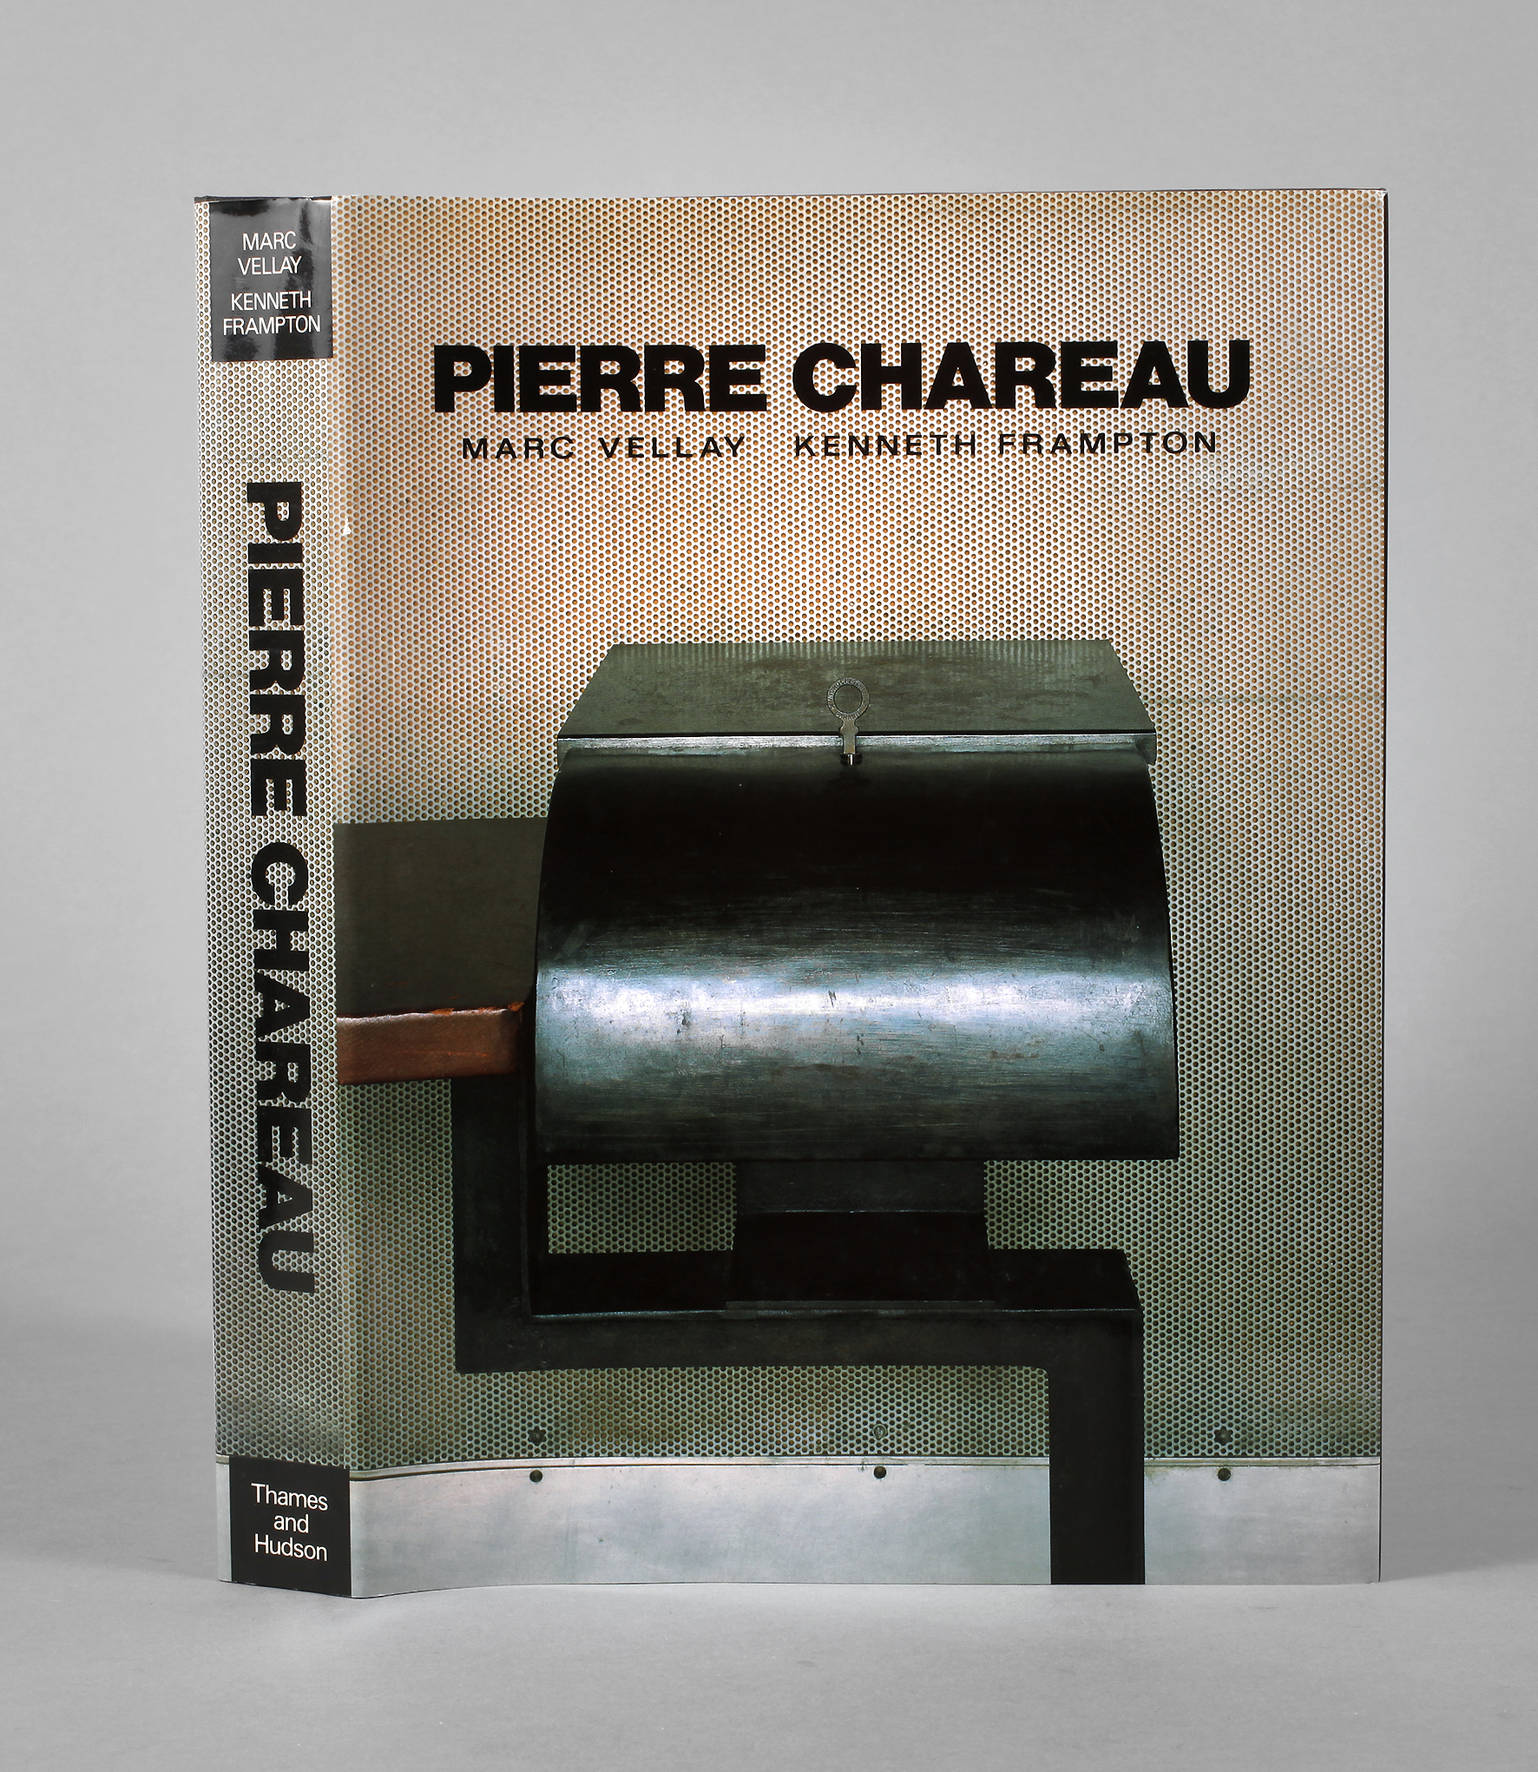 Pierre Chareau